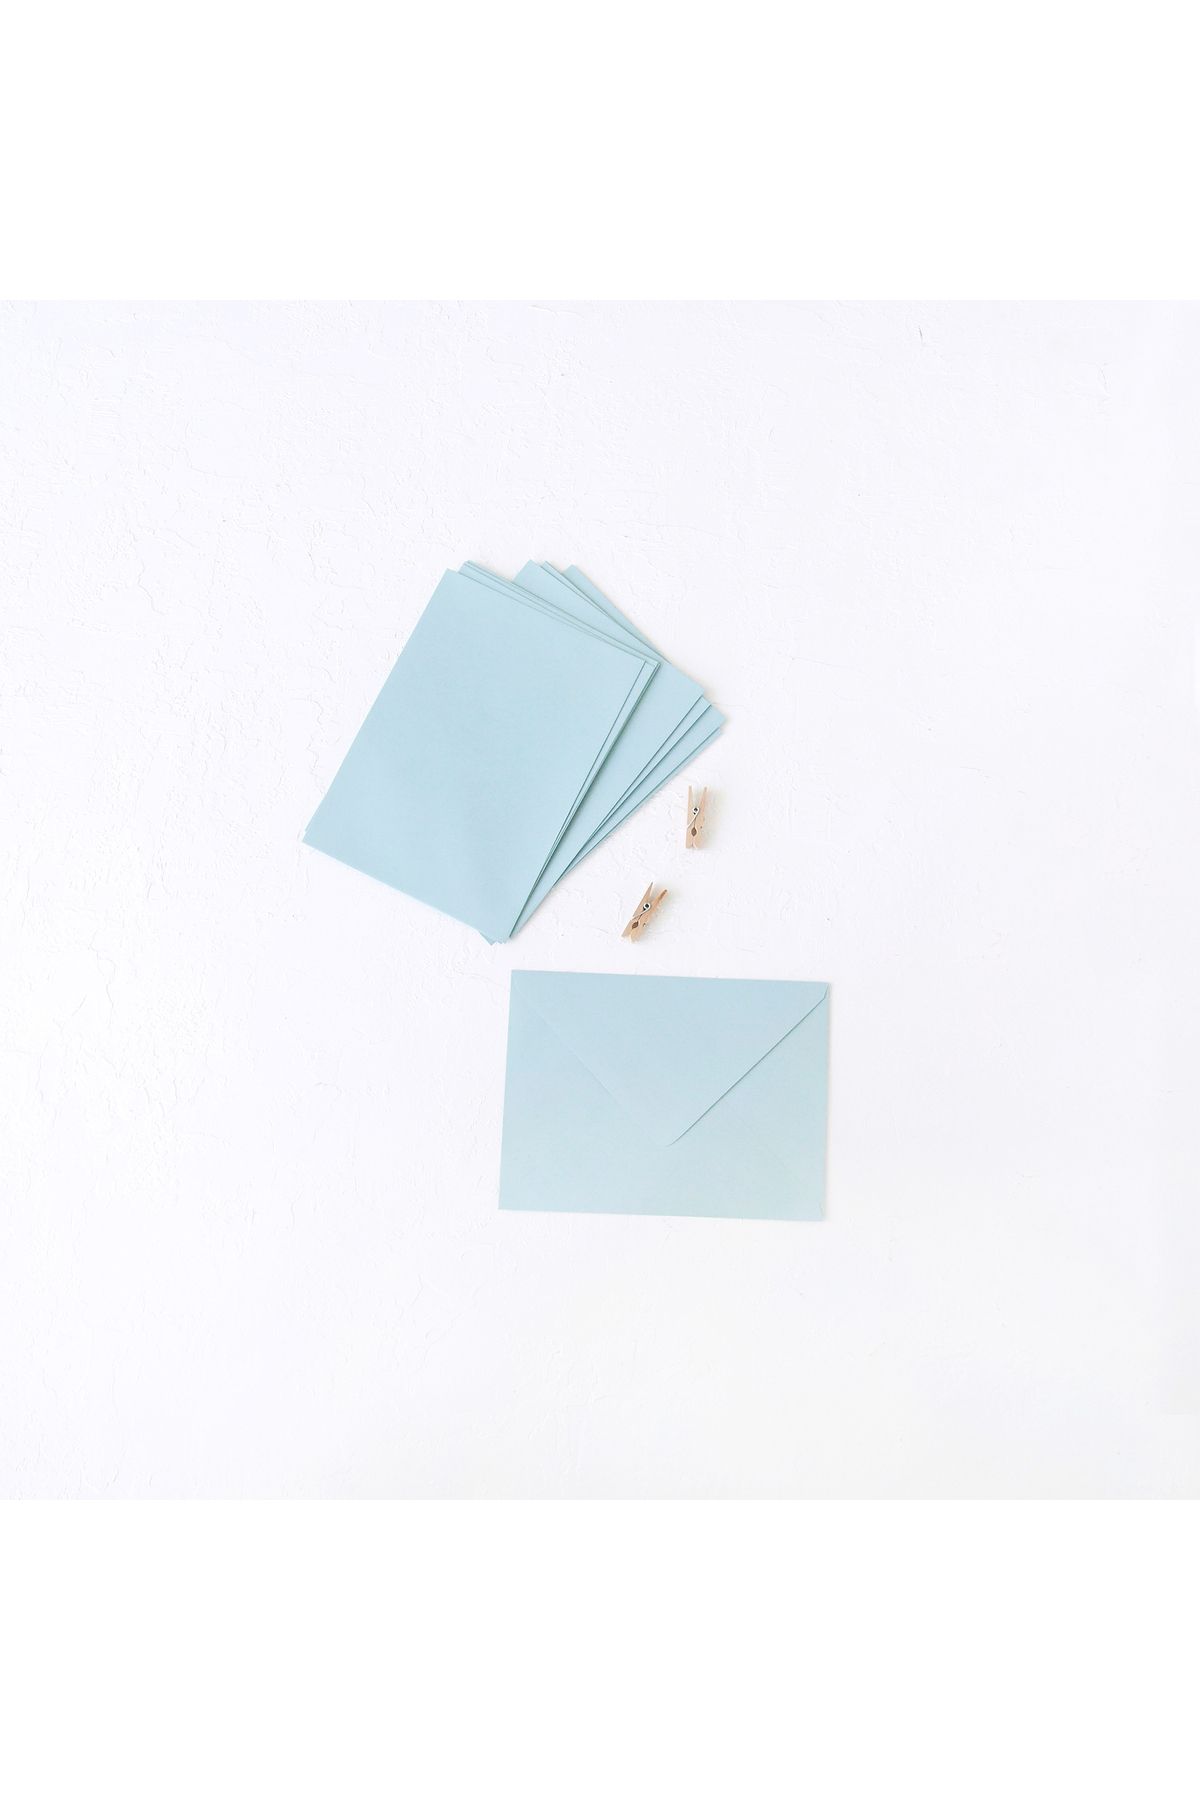 Bimotif Açık Mavi Standart Zarf, 13x18 Cm 100 Adet